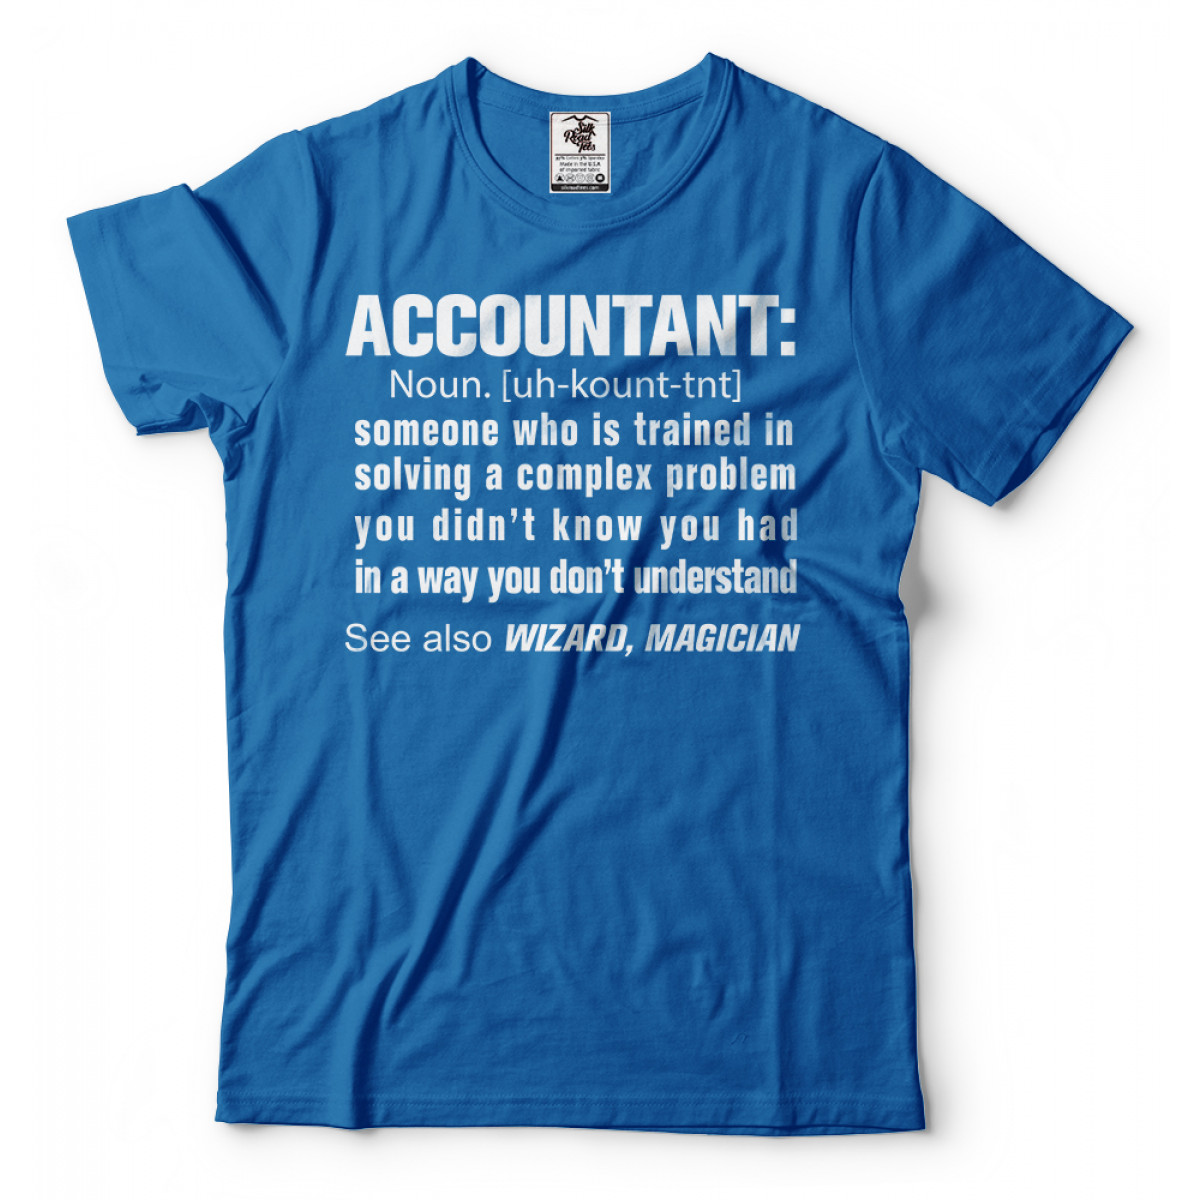 Start Salary for an Accountant
